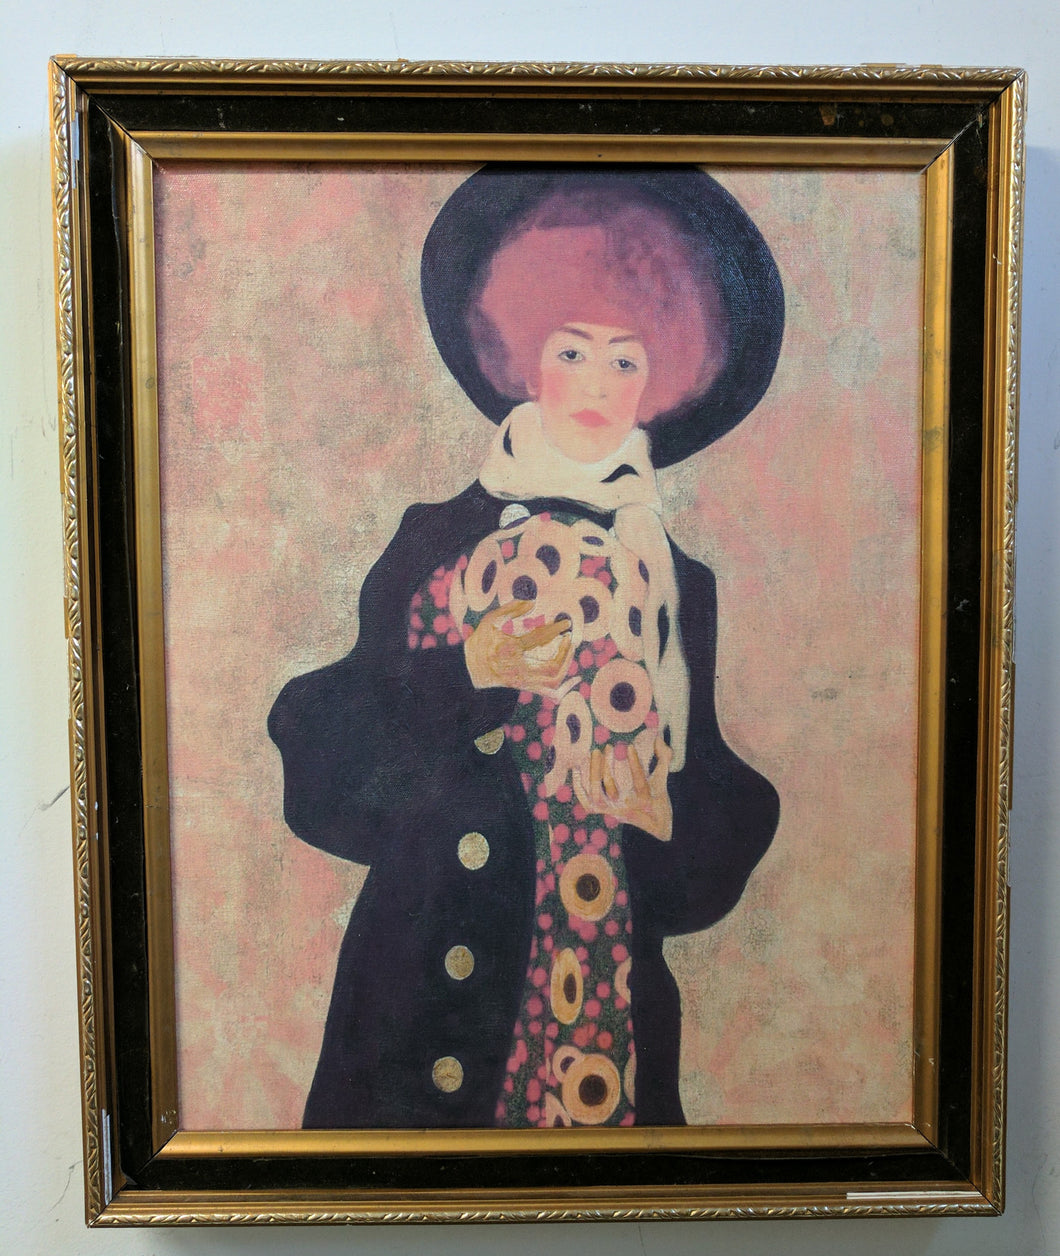 A-0052 Portrait of a Woman by Egon Schiele ca. 1913